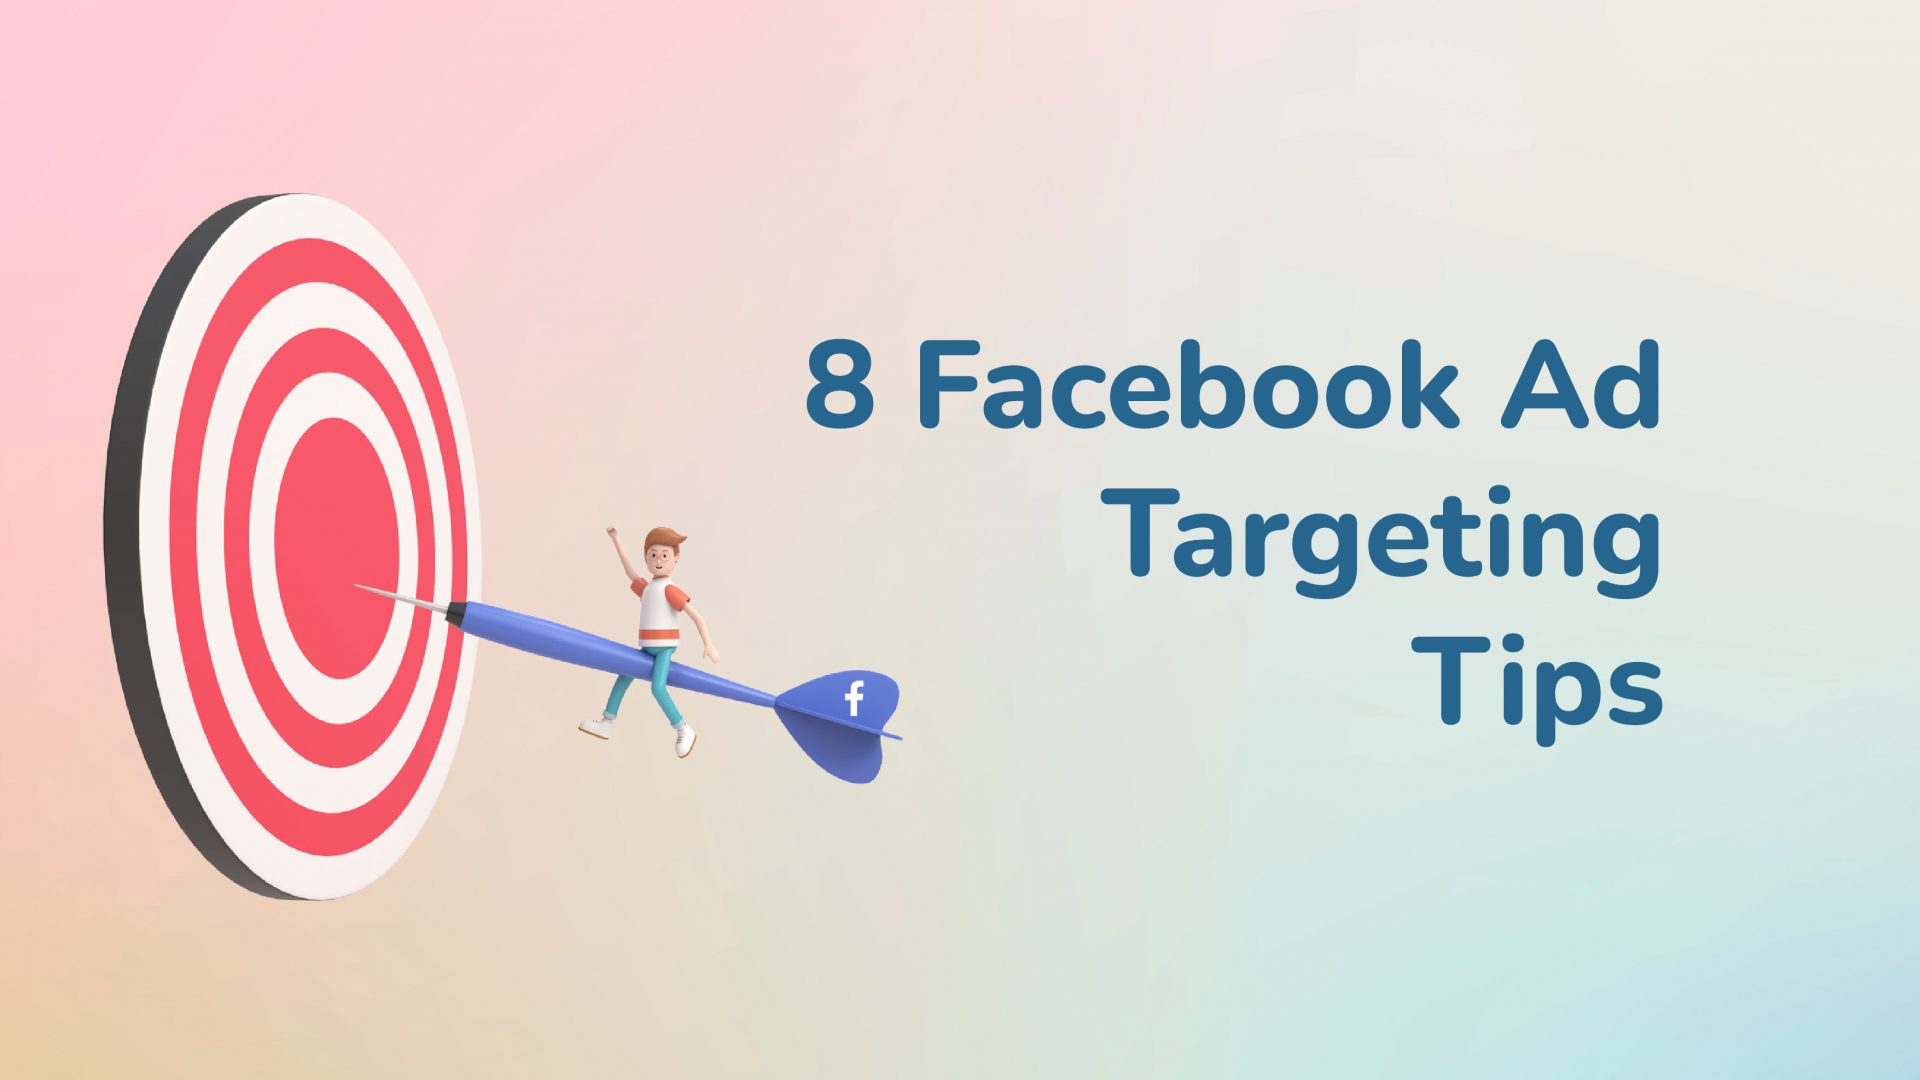 Facebook Ad Targeting Tips